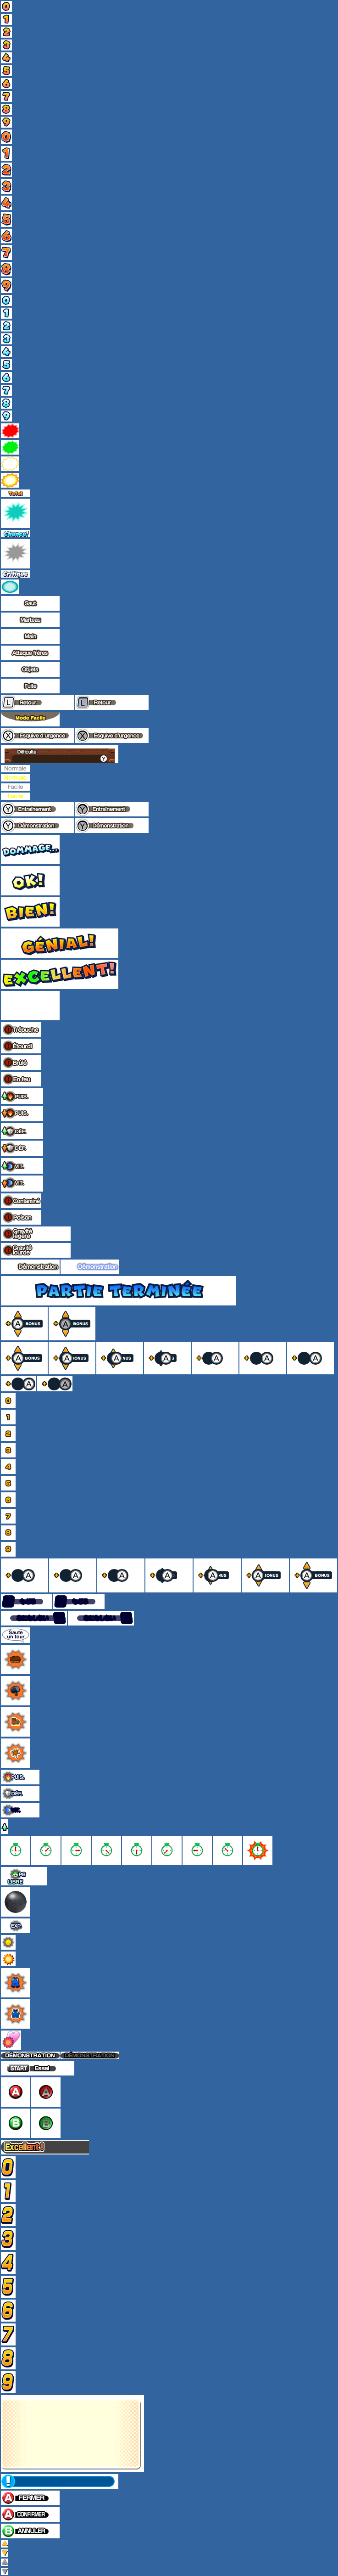 Battle UI (French)